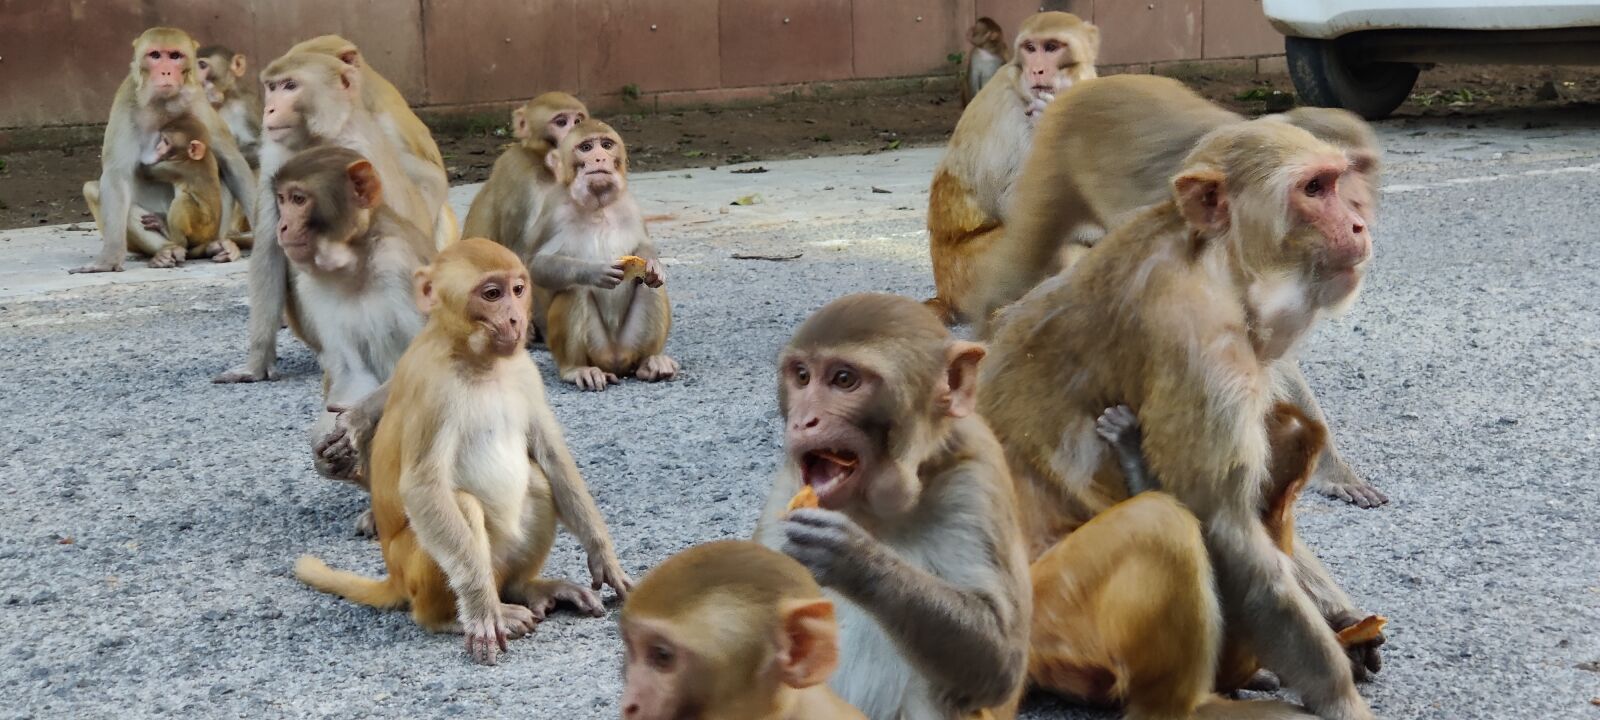 OnePlus HD1901 sample photo. Animals, monkey, portrait photography